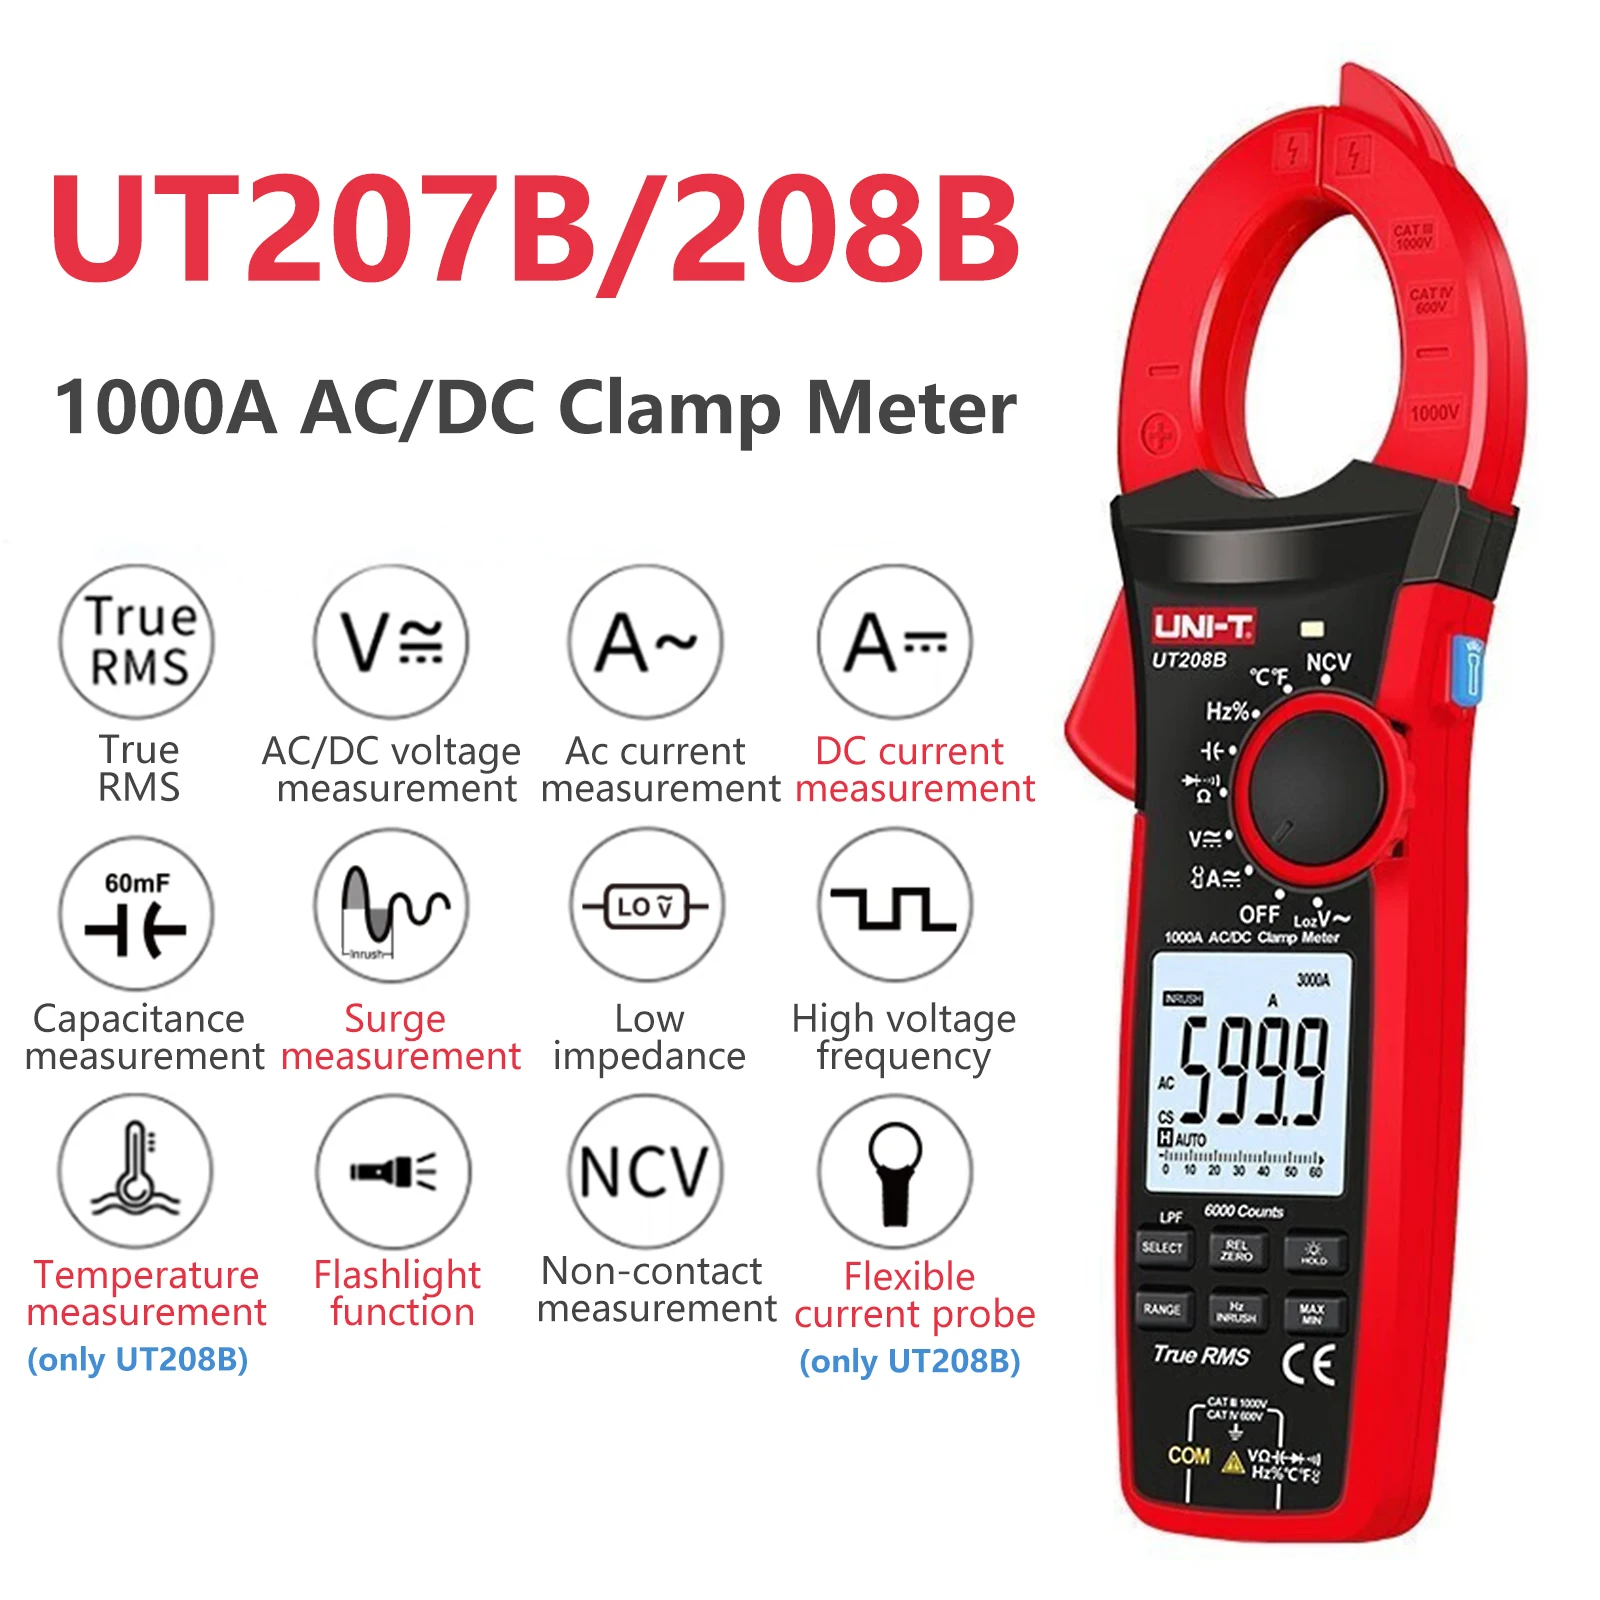 

UNI-T UT206B UT207B UT208B Digital Clamp Meter 1000A AC/DC Current 6000 Count Backlight Flashlight Multimeter Tester